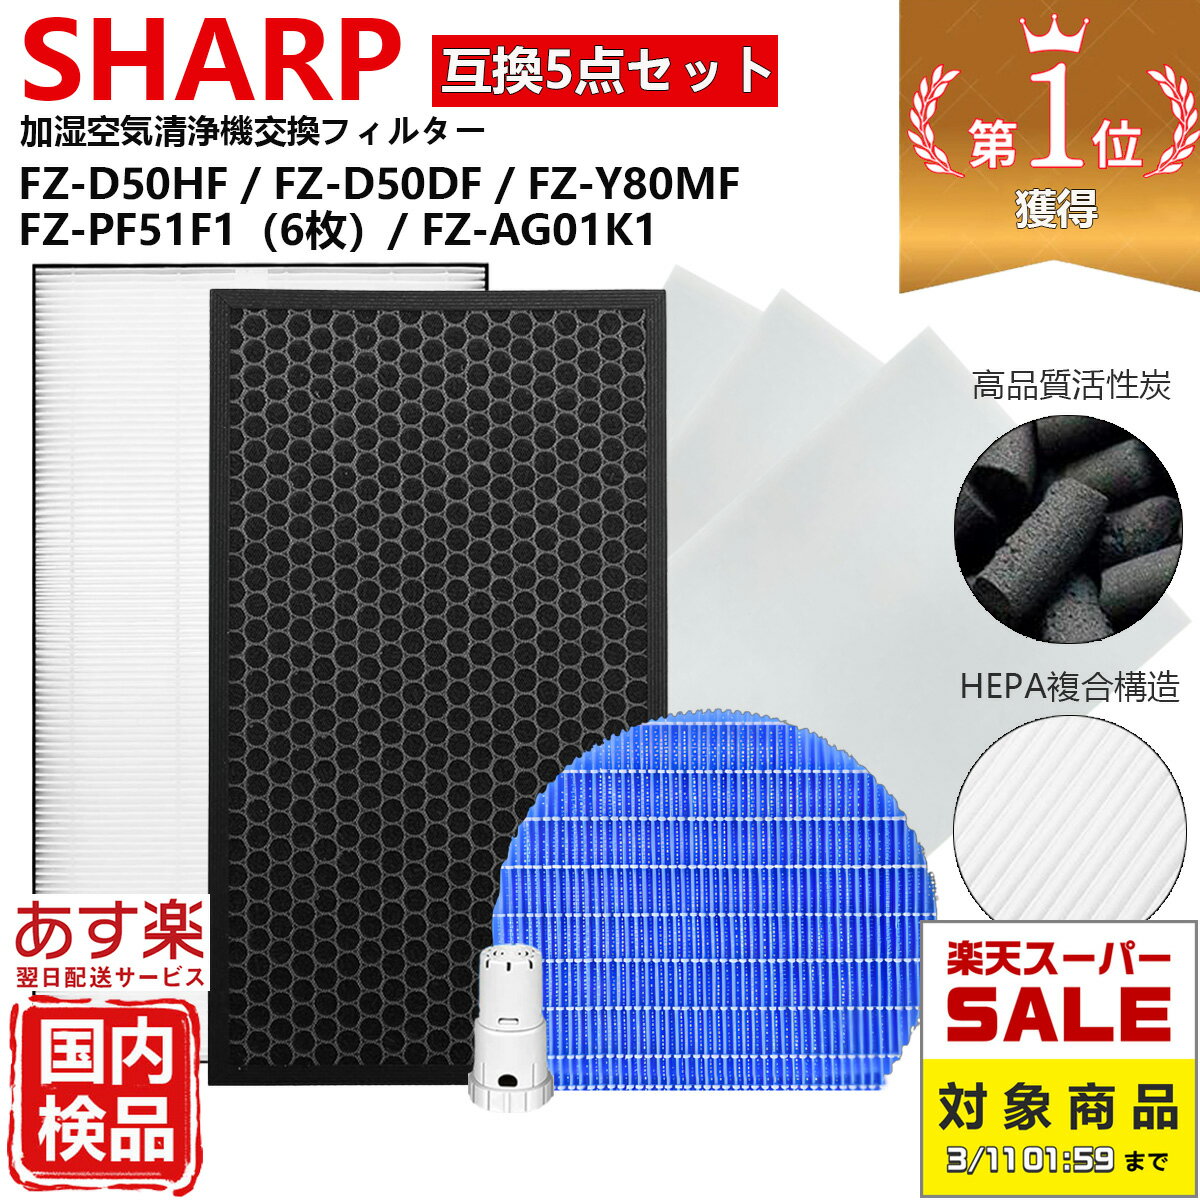 【SS期間限定価格】SHARP シャープ 空